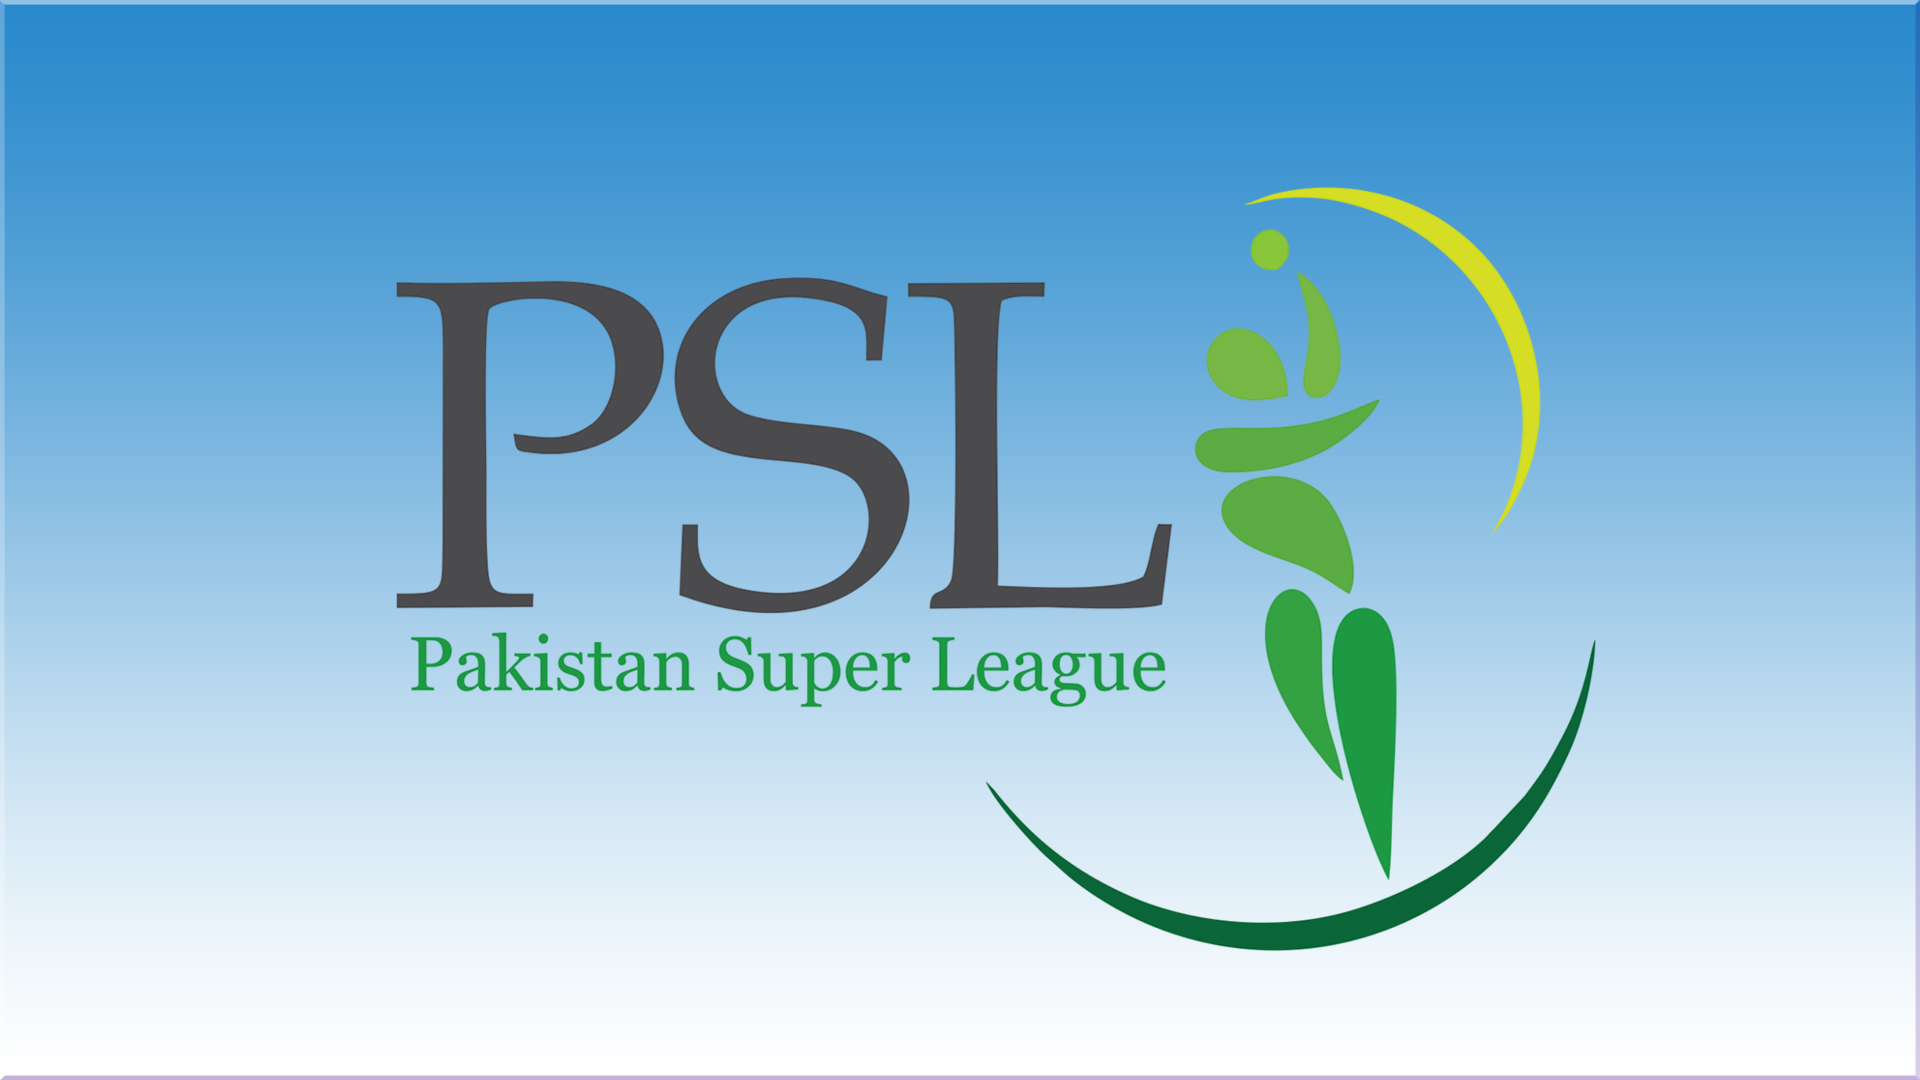 HBL PSL 2018 logo images